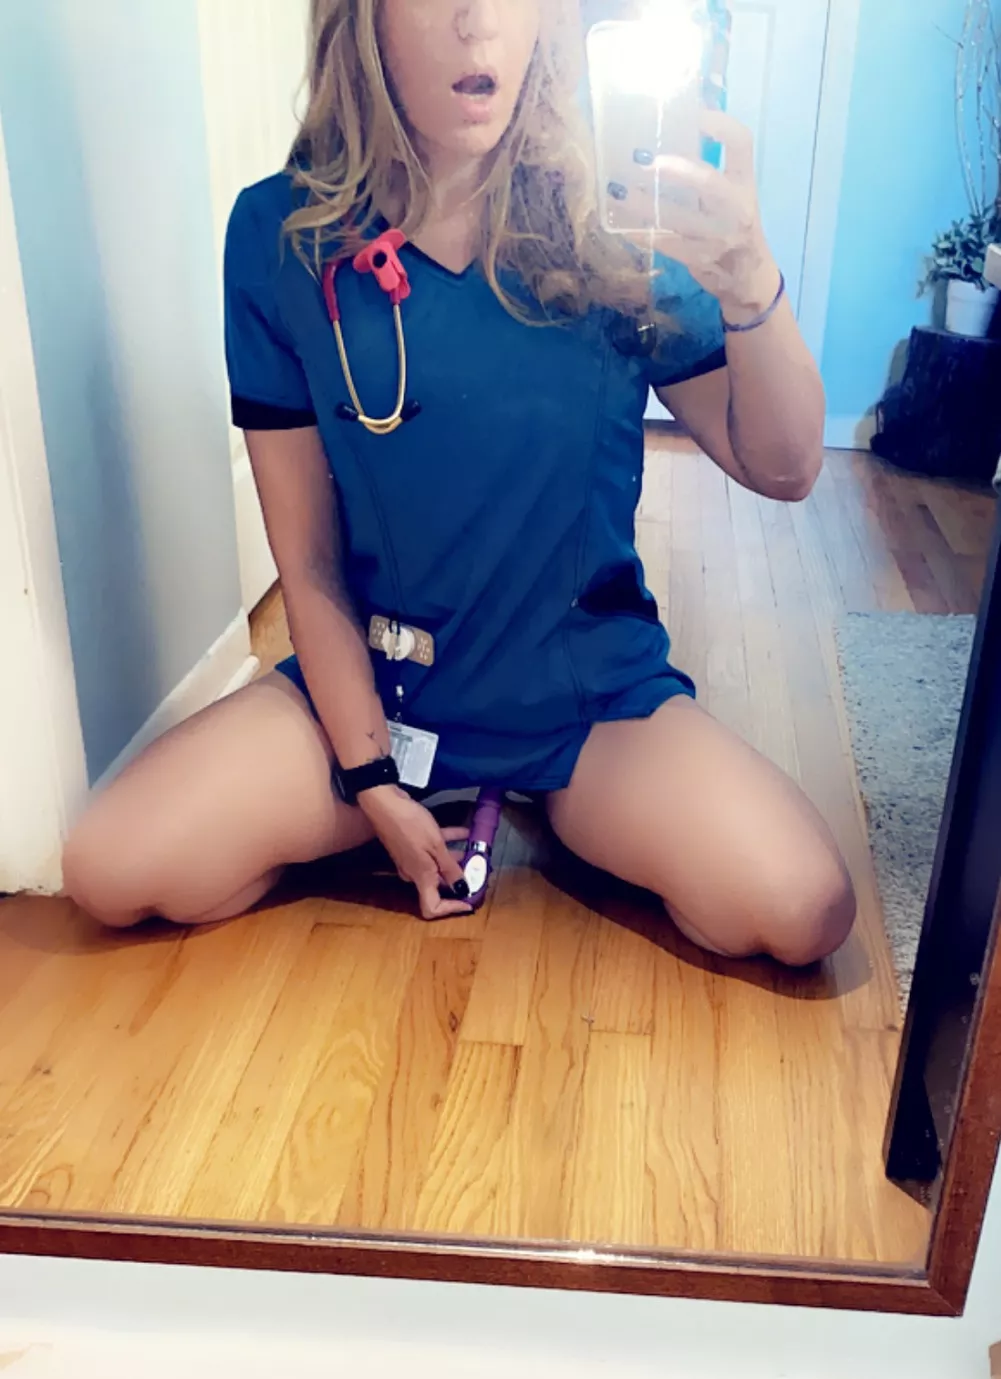 Do you like nurses cumming in their scrubs? Then follow me! nudes cgrey1433 NUDE-PICS image